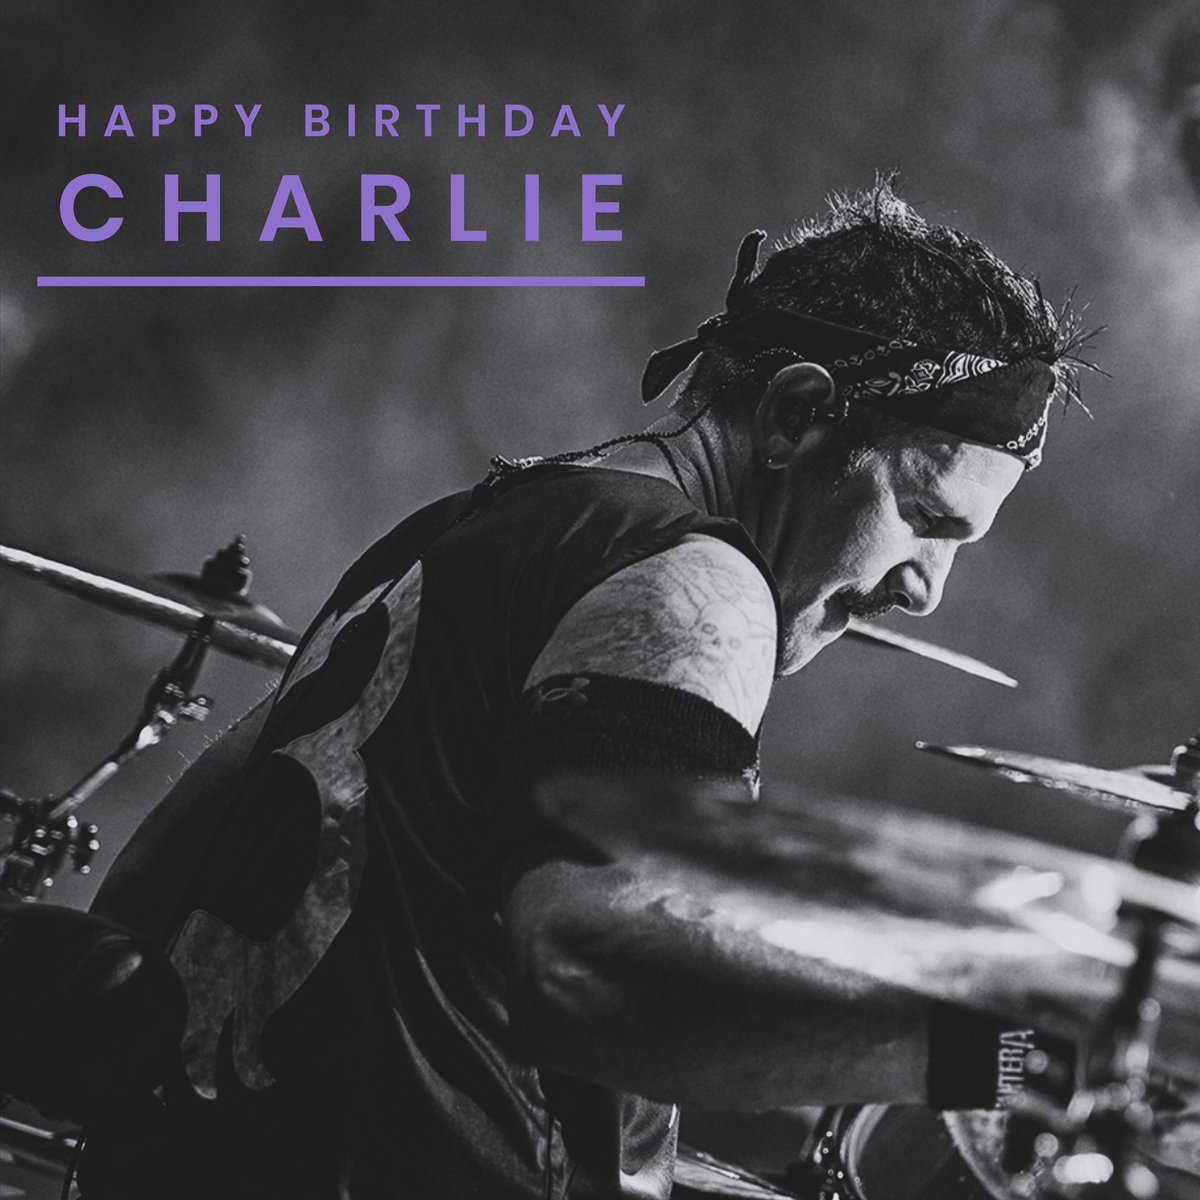 Happy Birthday @skisum! #charliebenante #happybirthday #pantera #anthrax